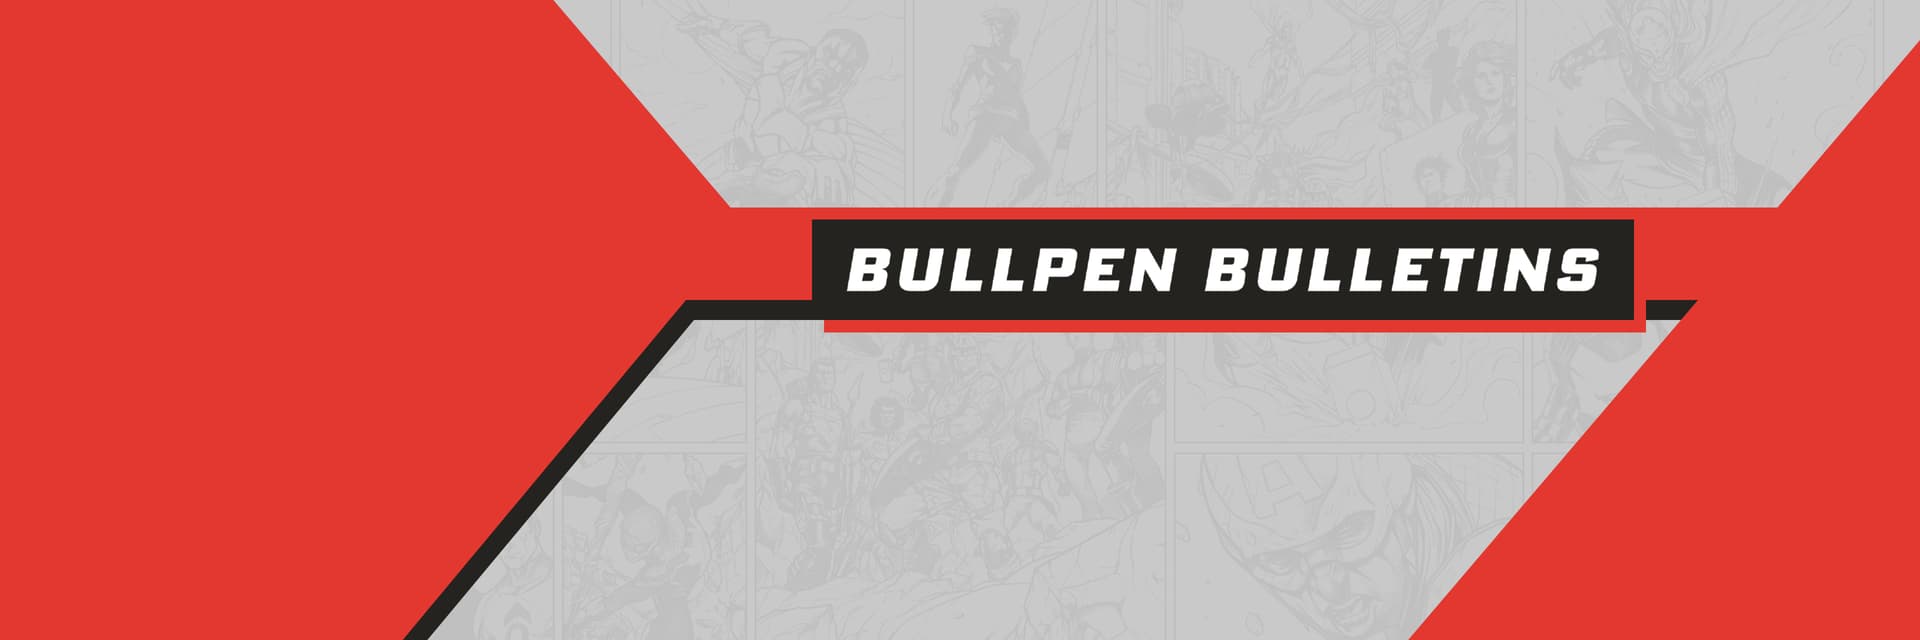 Marvel Creators Bullpen Bulletins Background